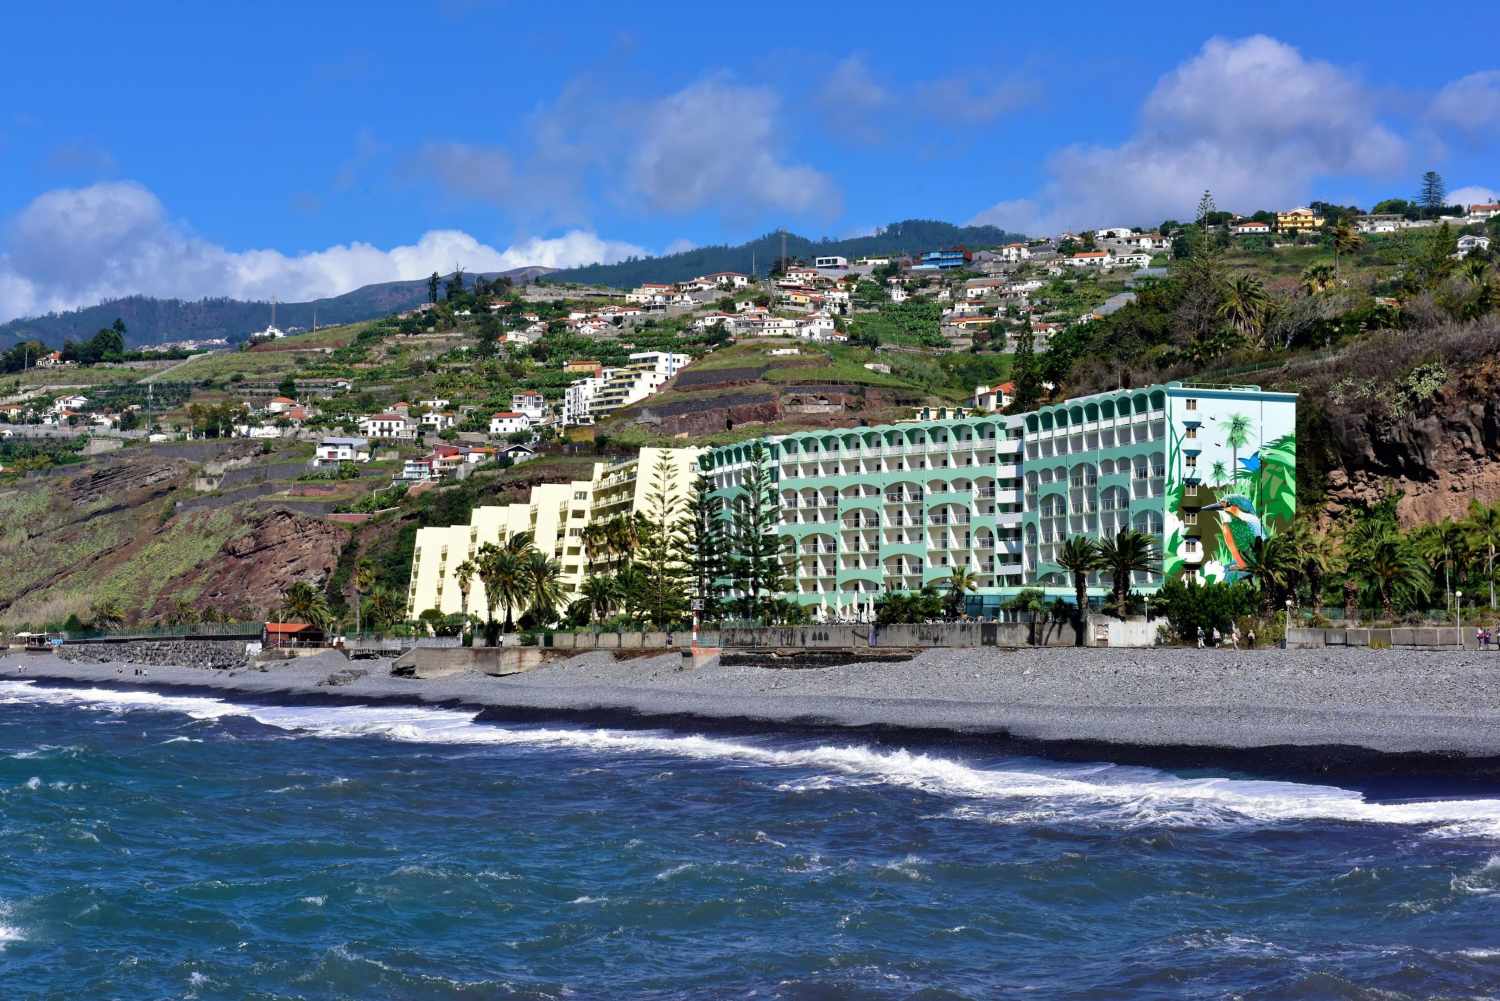 Pestana Ocean Bay, Funchal, Madeira, Portugal